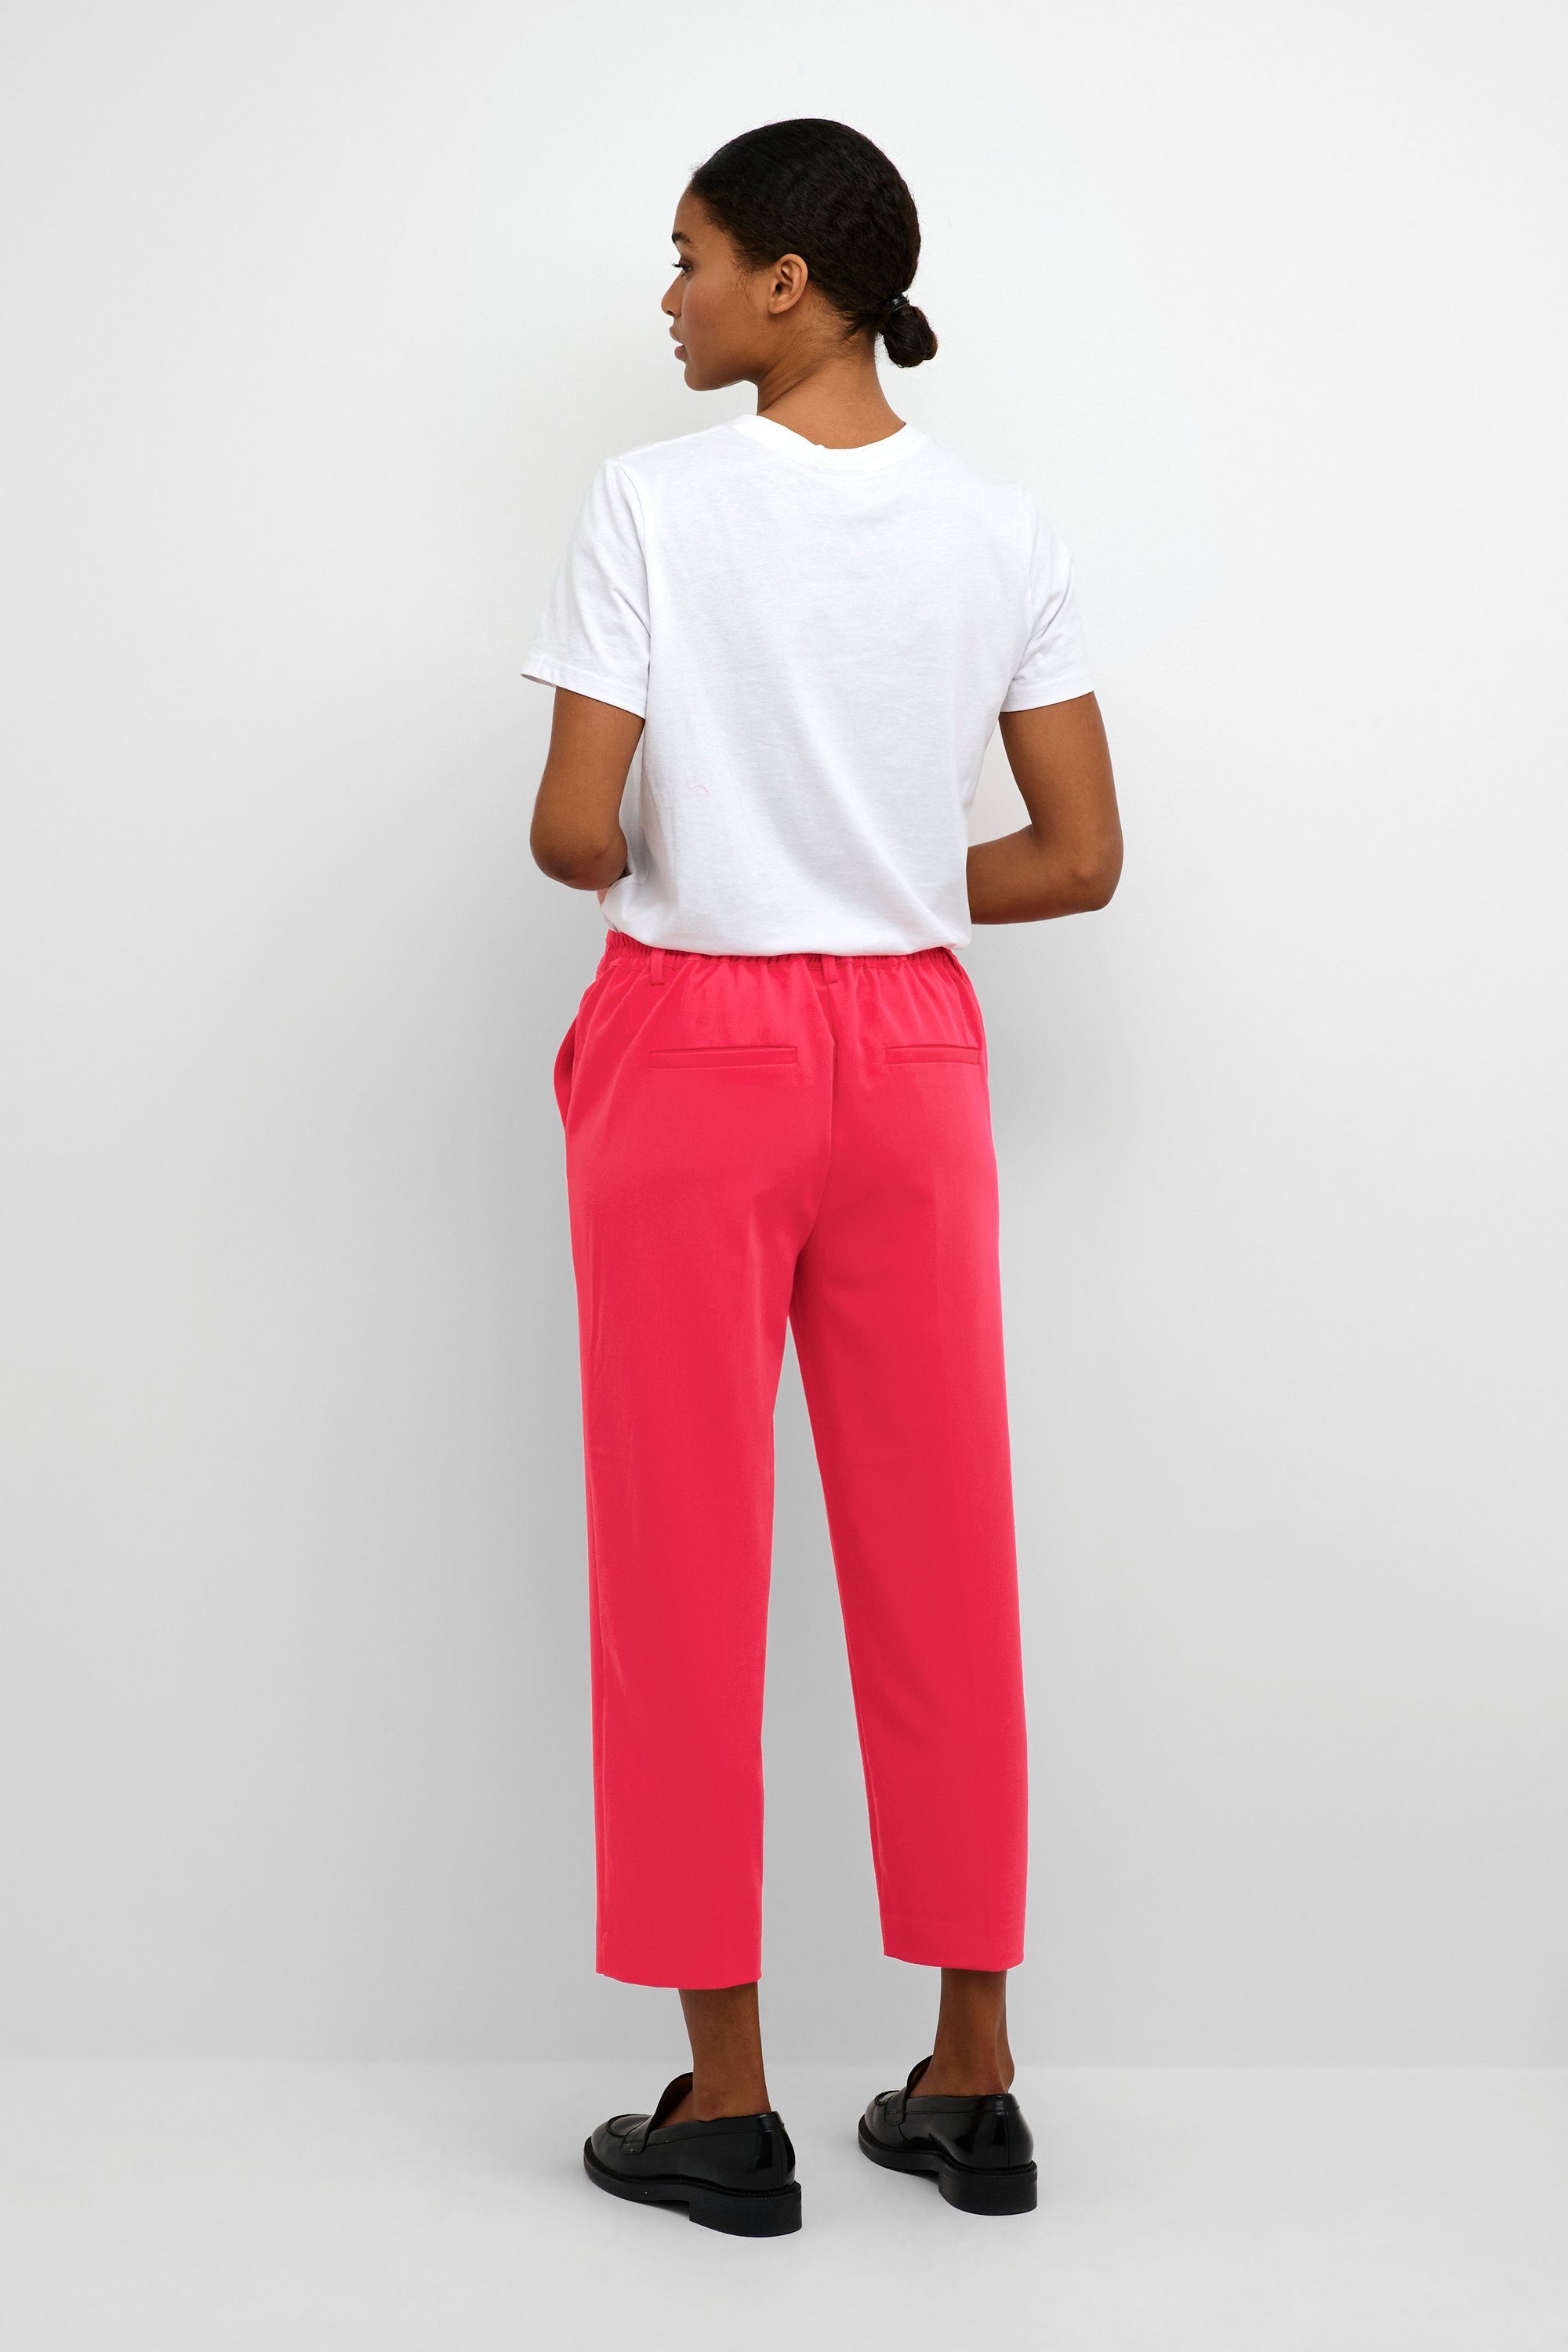 KAFFE Anzughose Pants KAsakura Suiting Pink Virtual